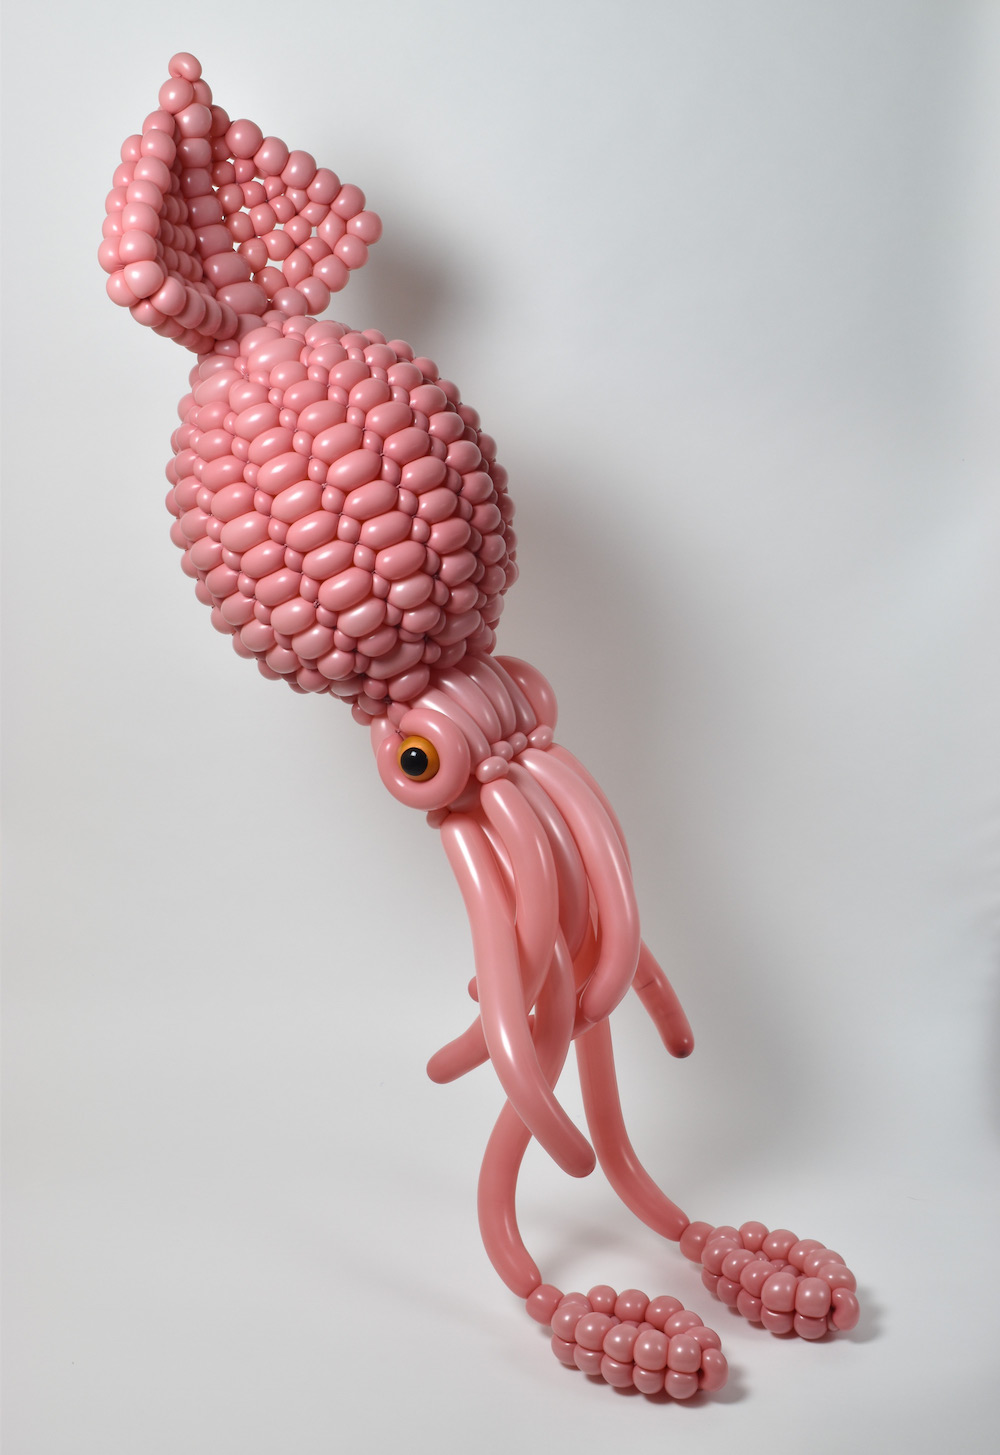 https://creapills.com/wp-content/uploads/2019/05/masayoshi-matsumoto-ballons-sculptures-animaux-6.jpg